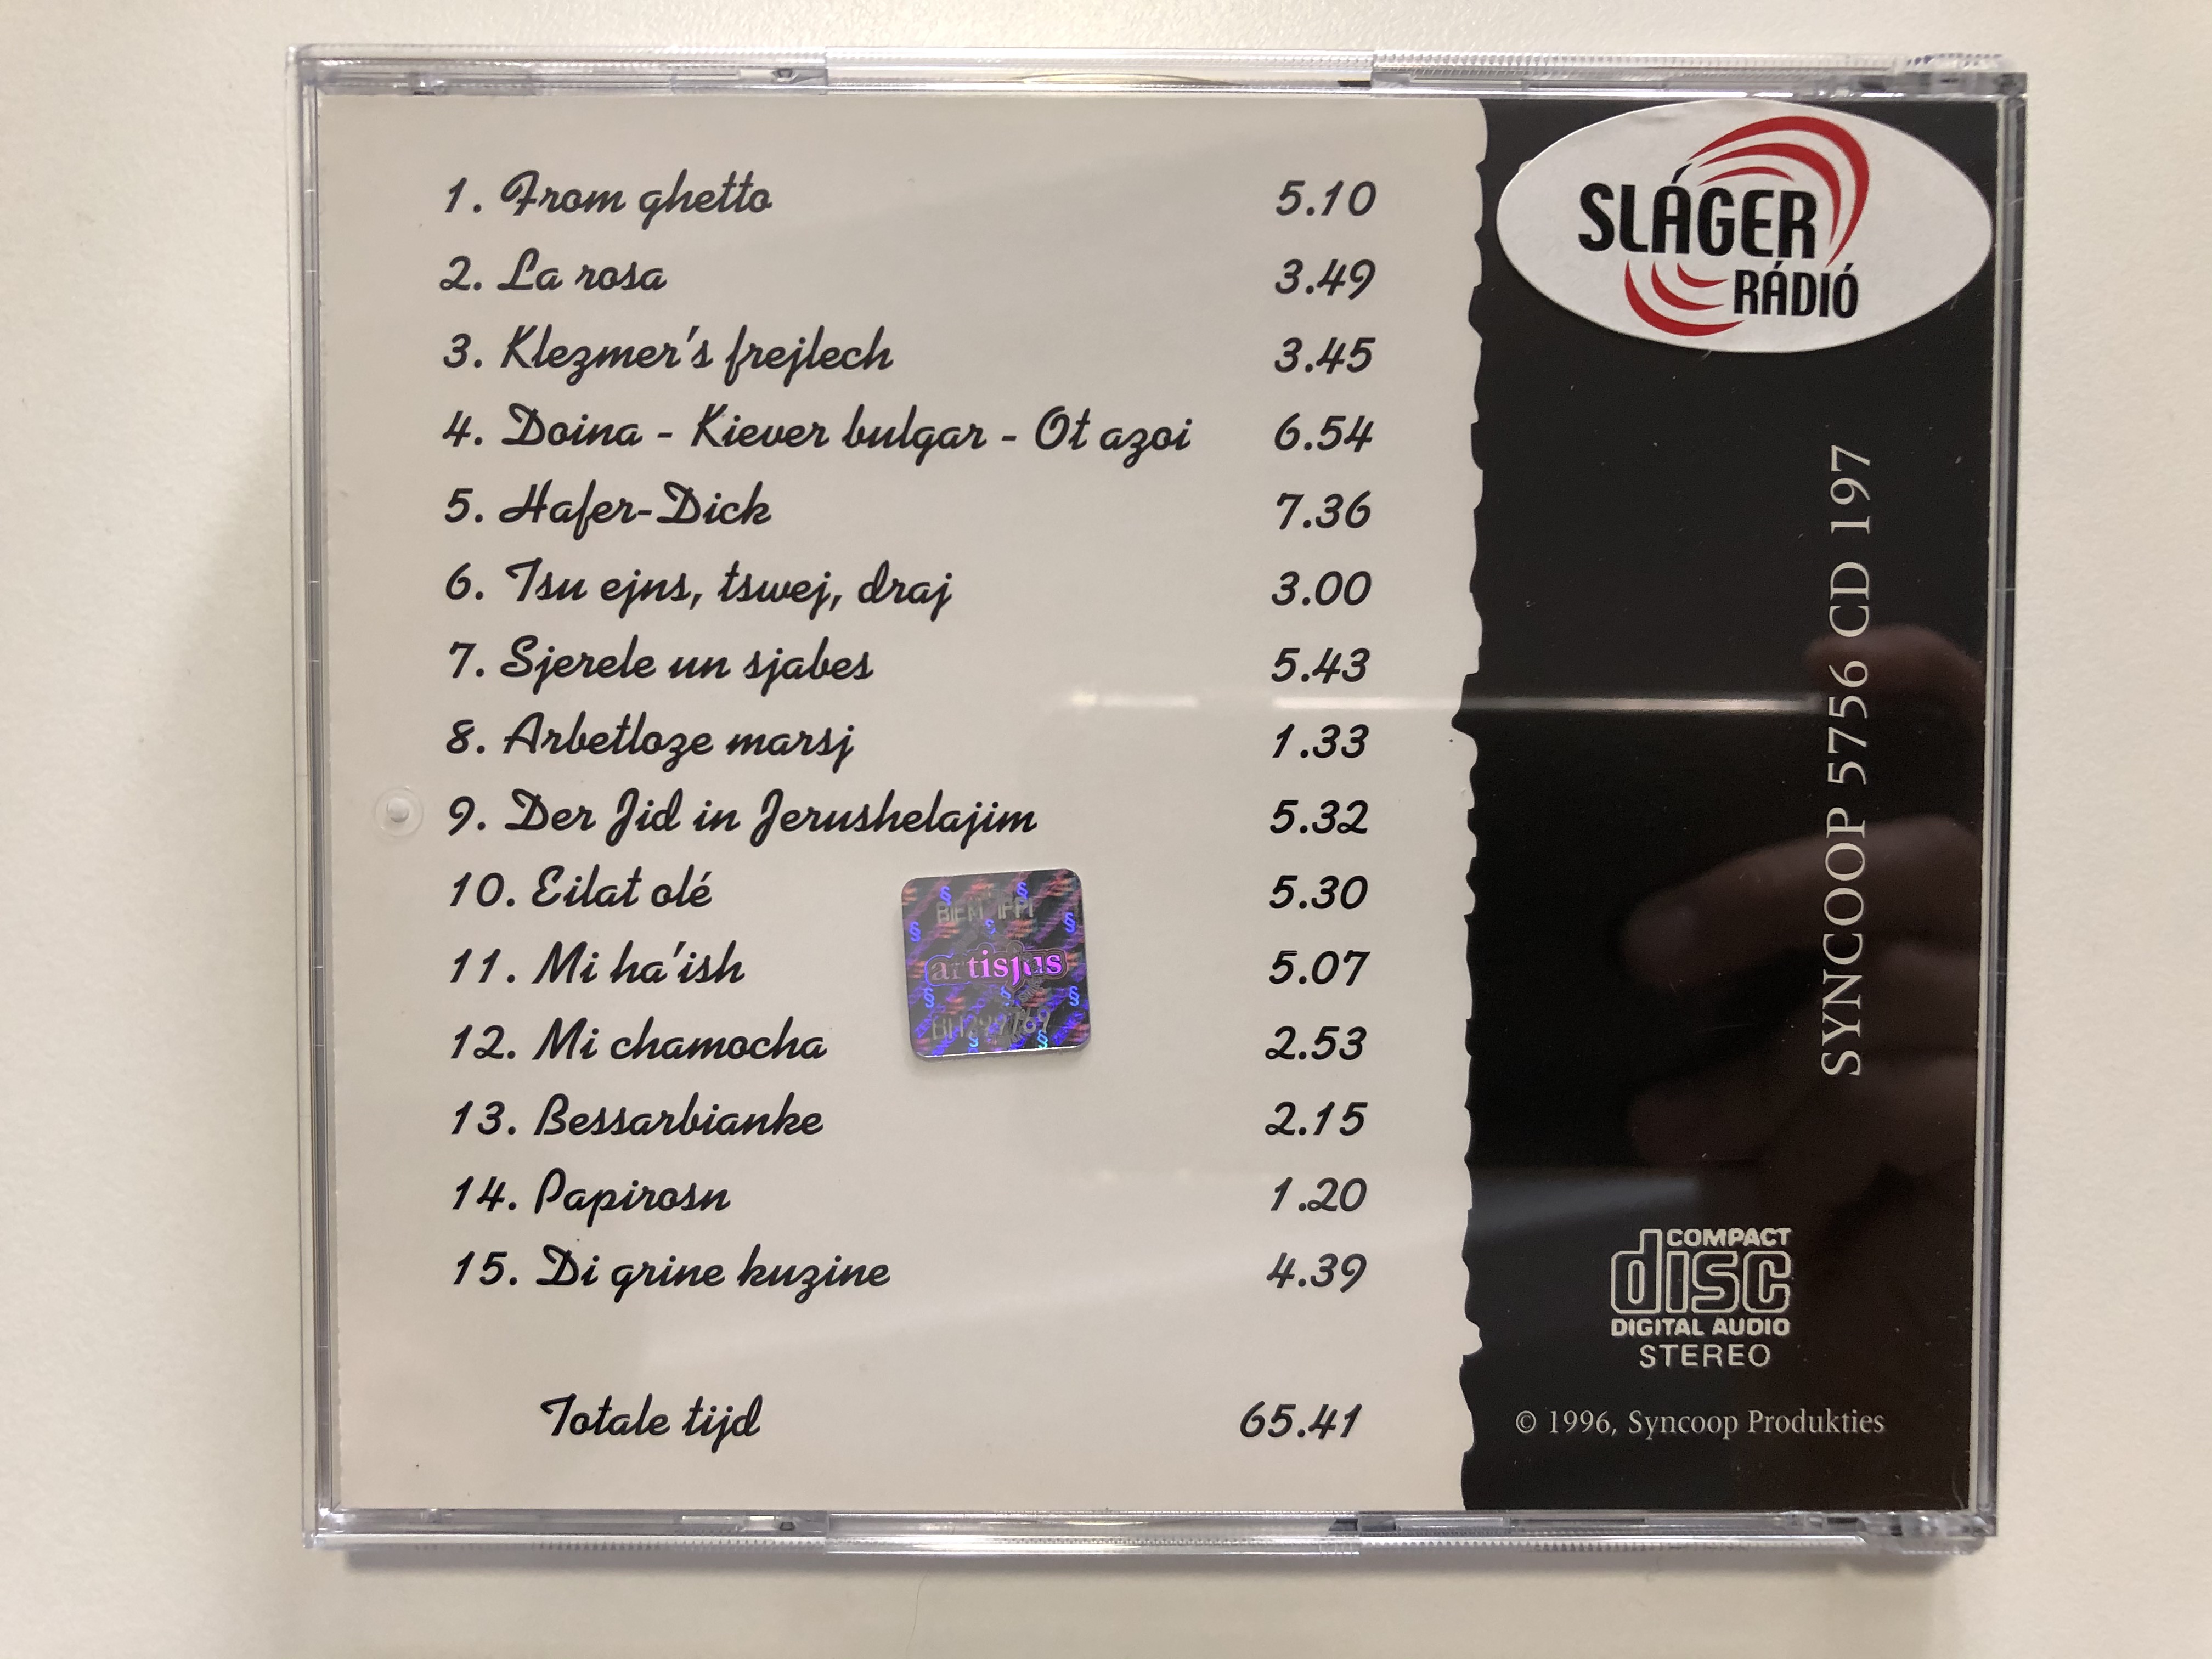 nebbisj-un-rebbisj-tov-syncoop-produkties-audio-cd-1996-5756-cd-197-8-.jpg